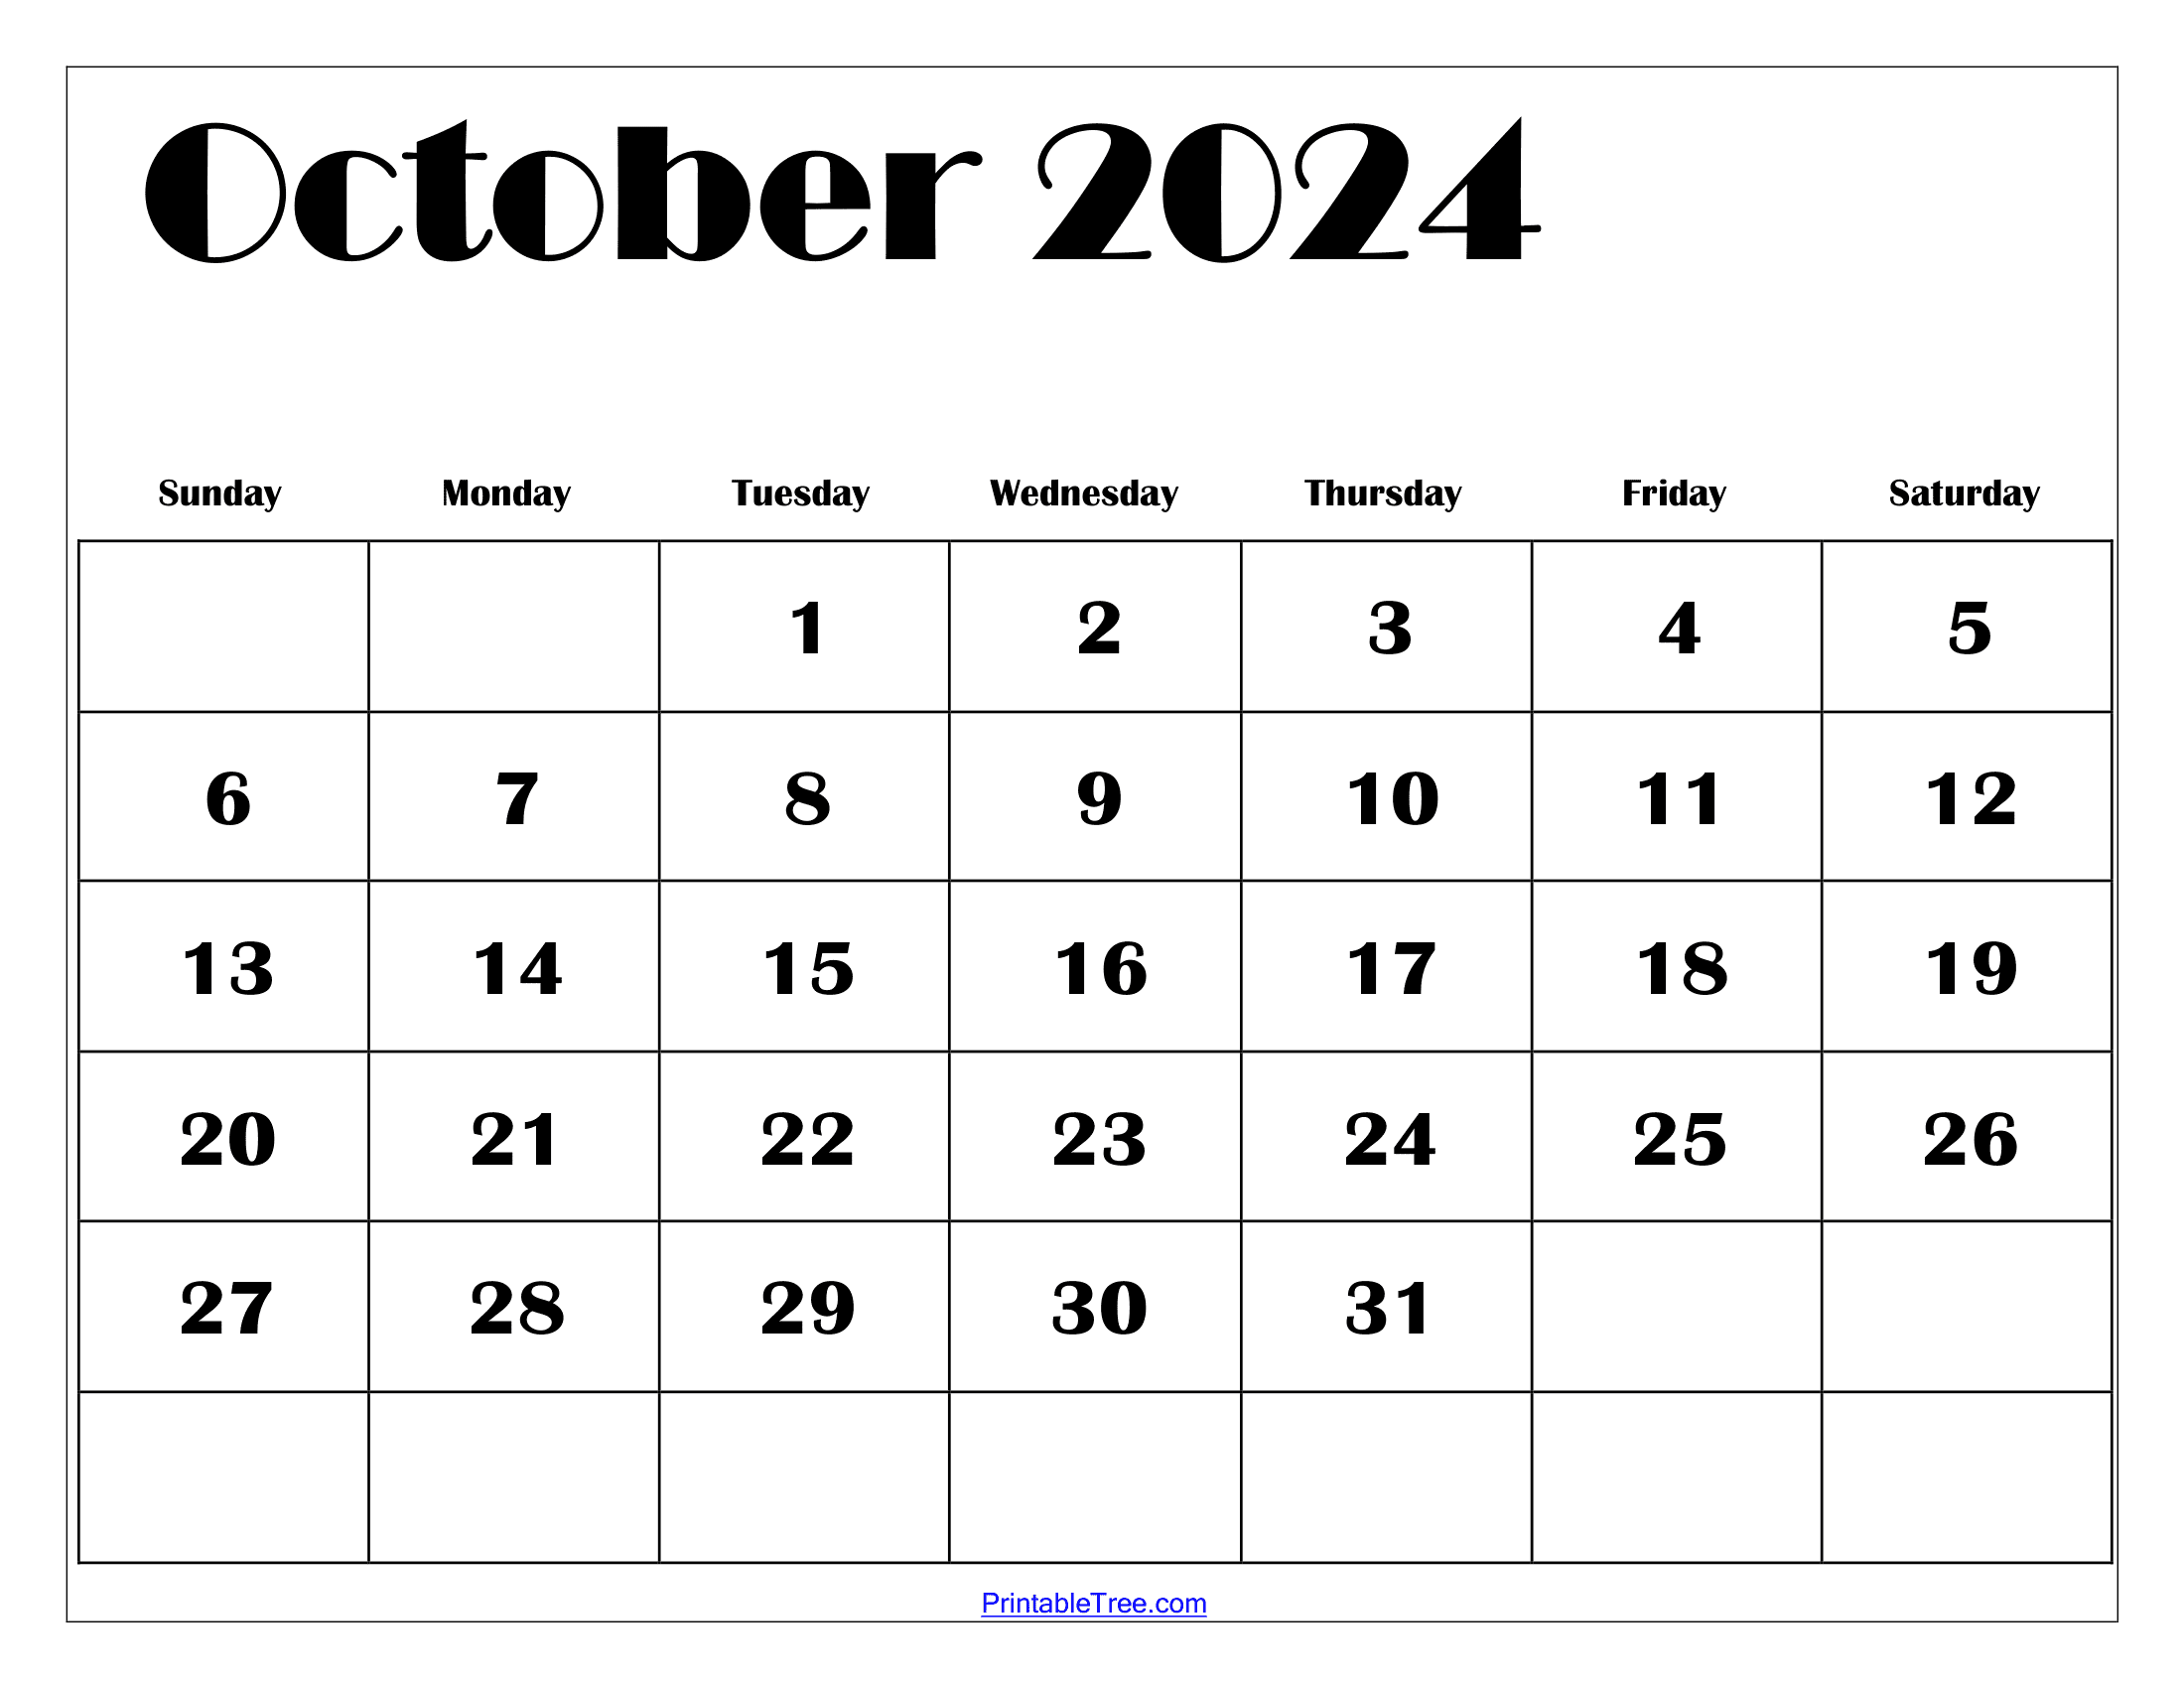 October 2024 Calendar Printable Pdf Free Templates With Holidays for October 2024 Calendar Printable Free